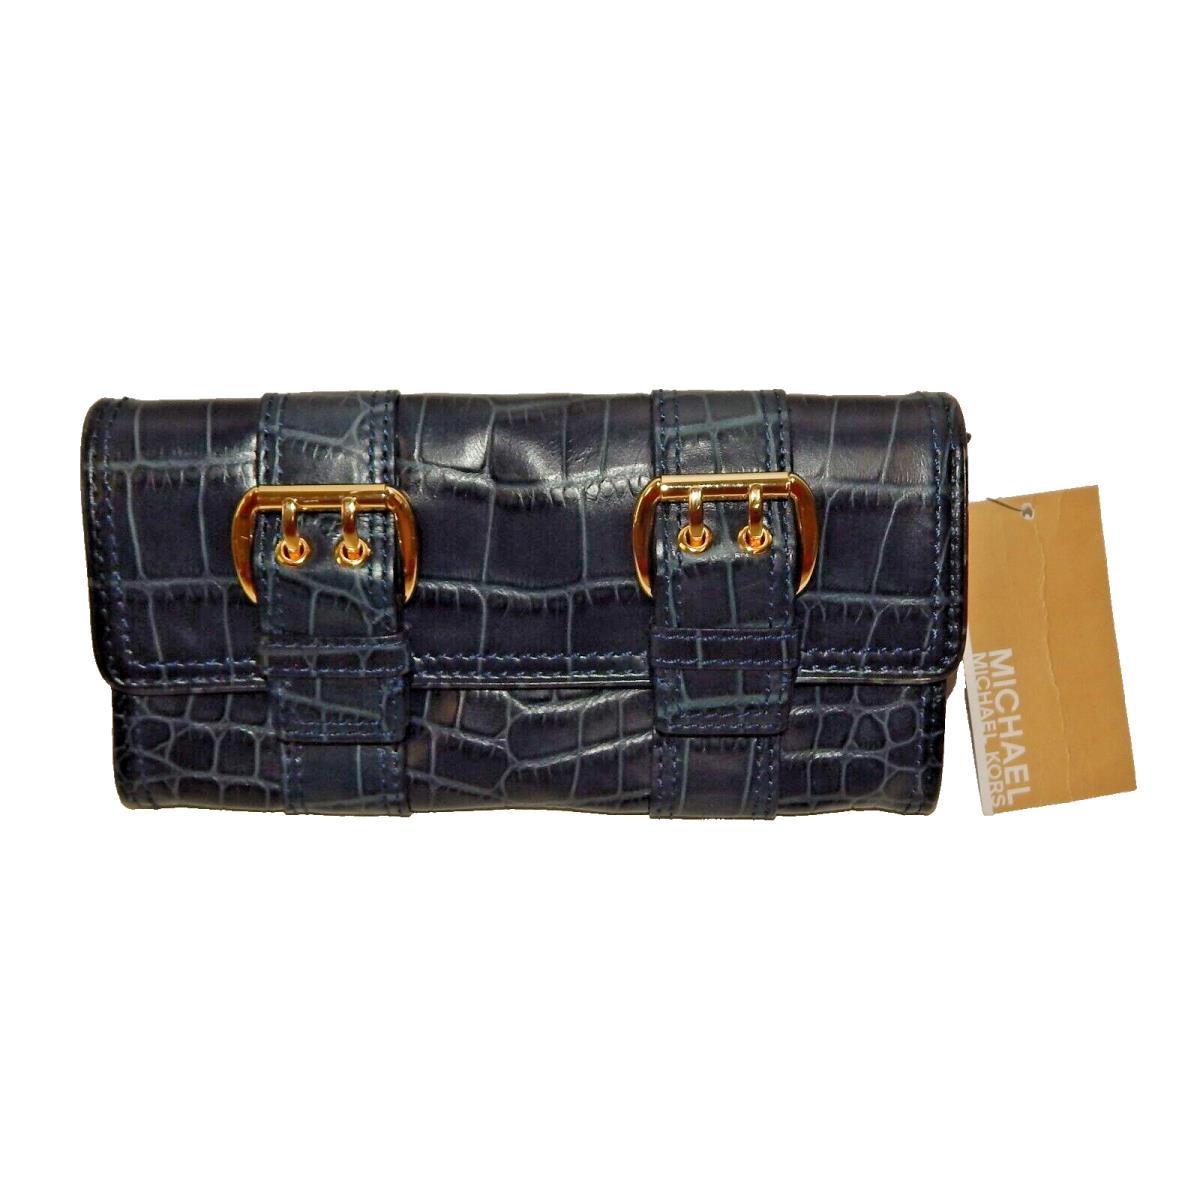 Vintage Michael Kors Redding Navy Embossed Leather Clutch Wallet